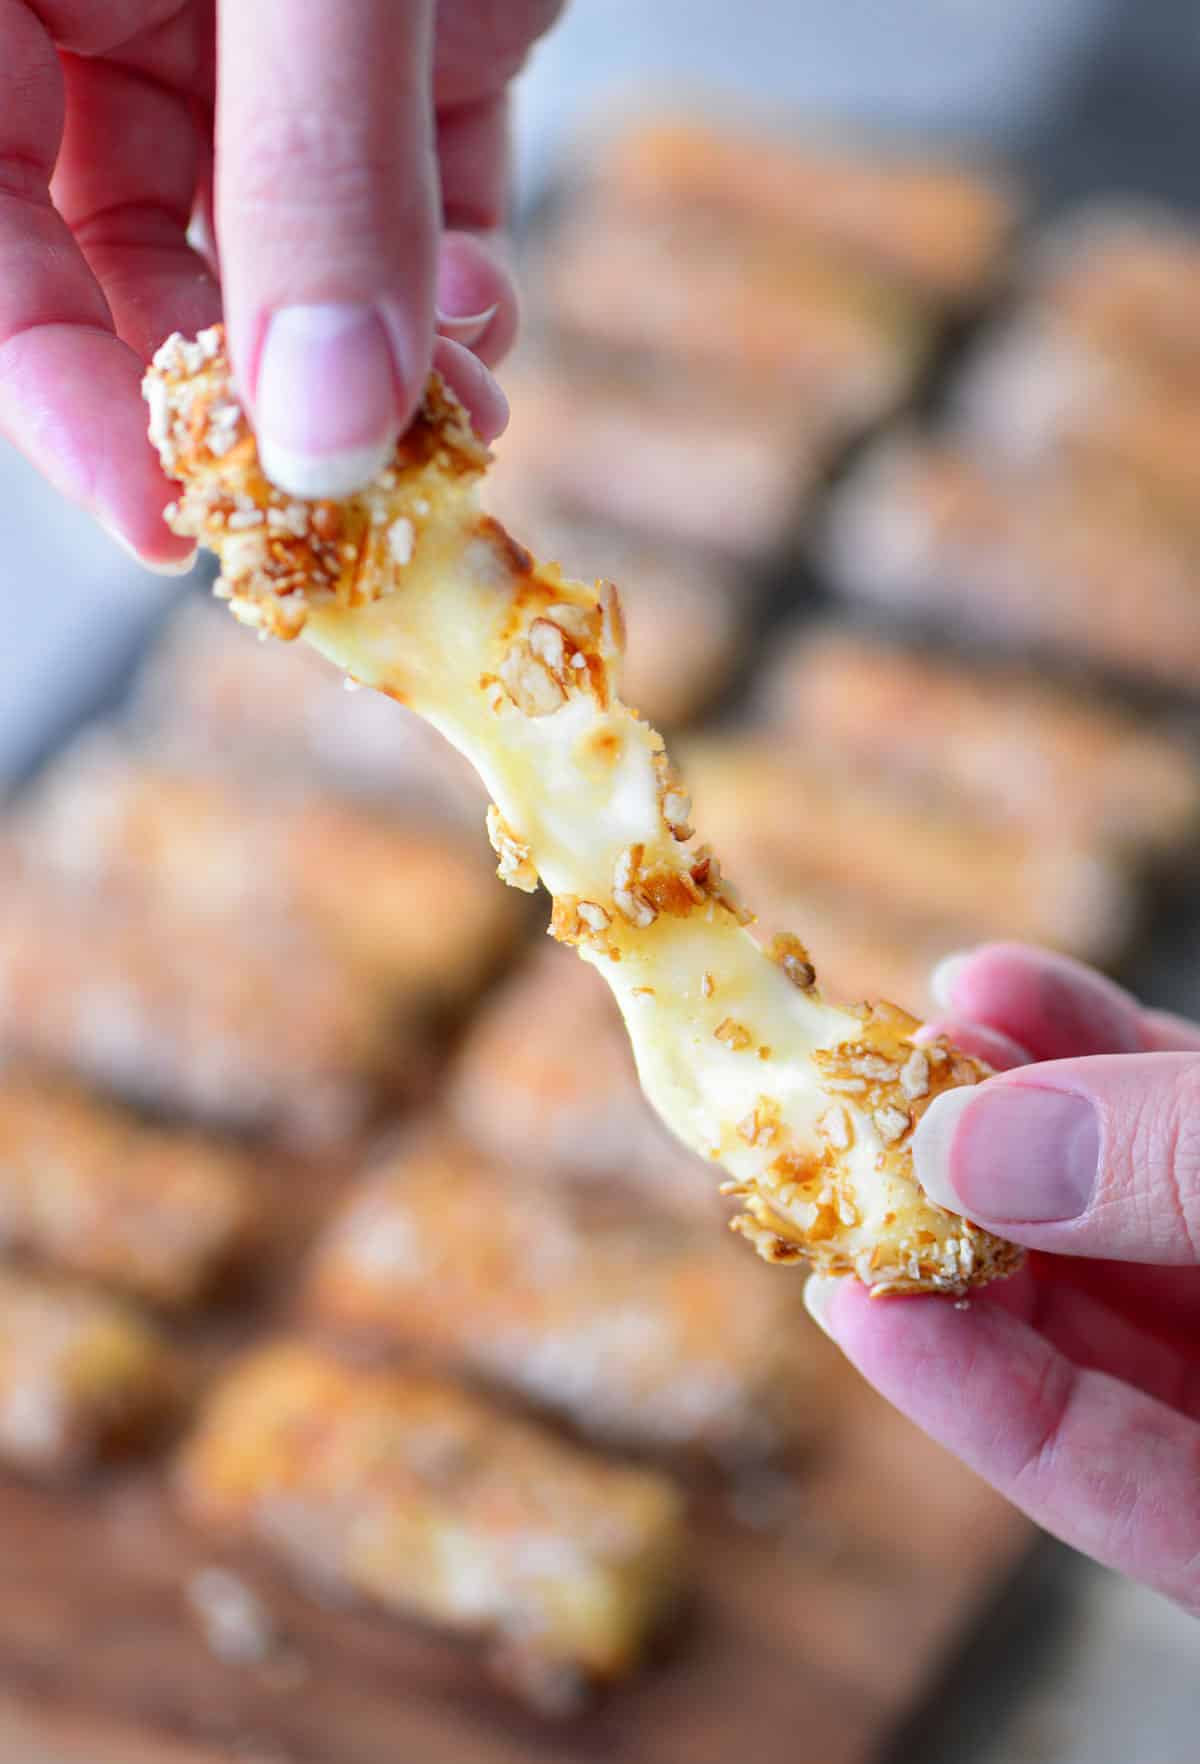 pretzel crusted mozzarella cheese sticks being pulled apart